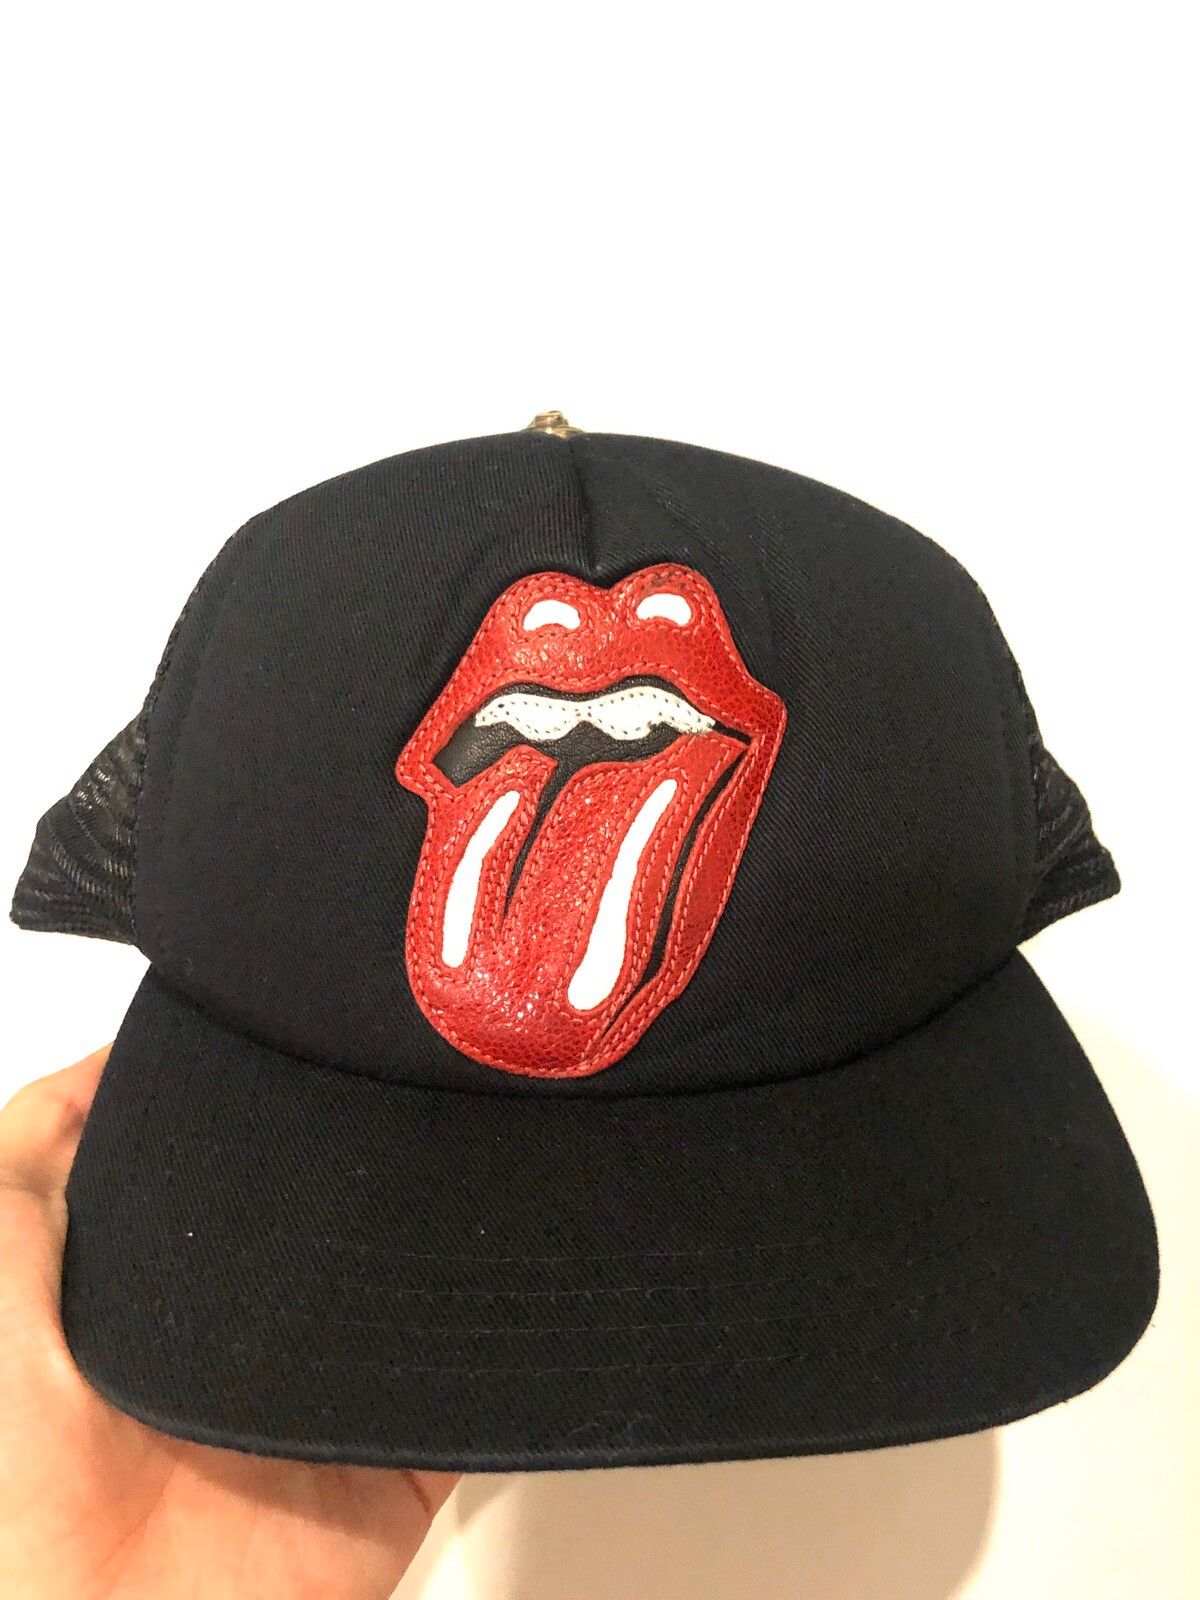 Chrome hearts x Rolling Stones trucker hat - 2